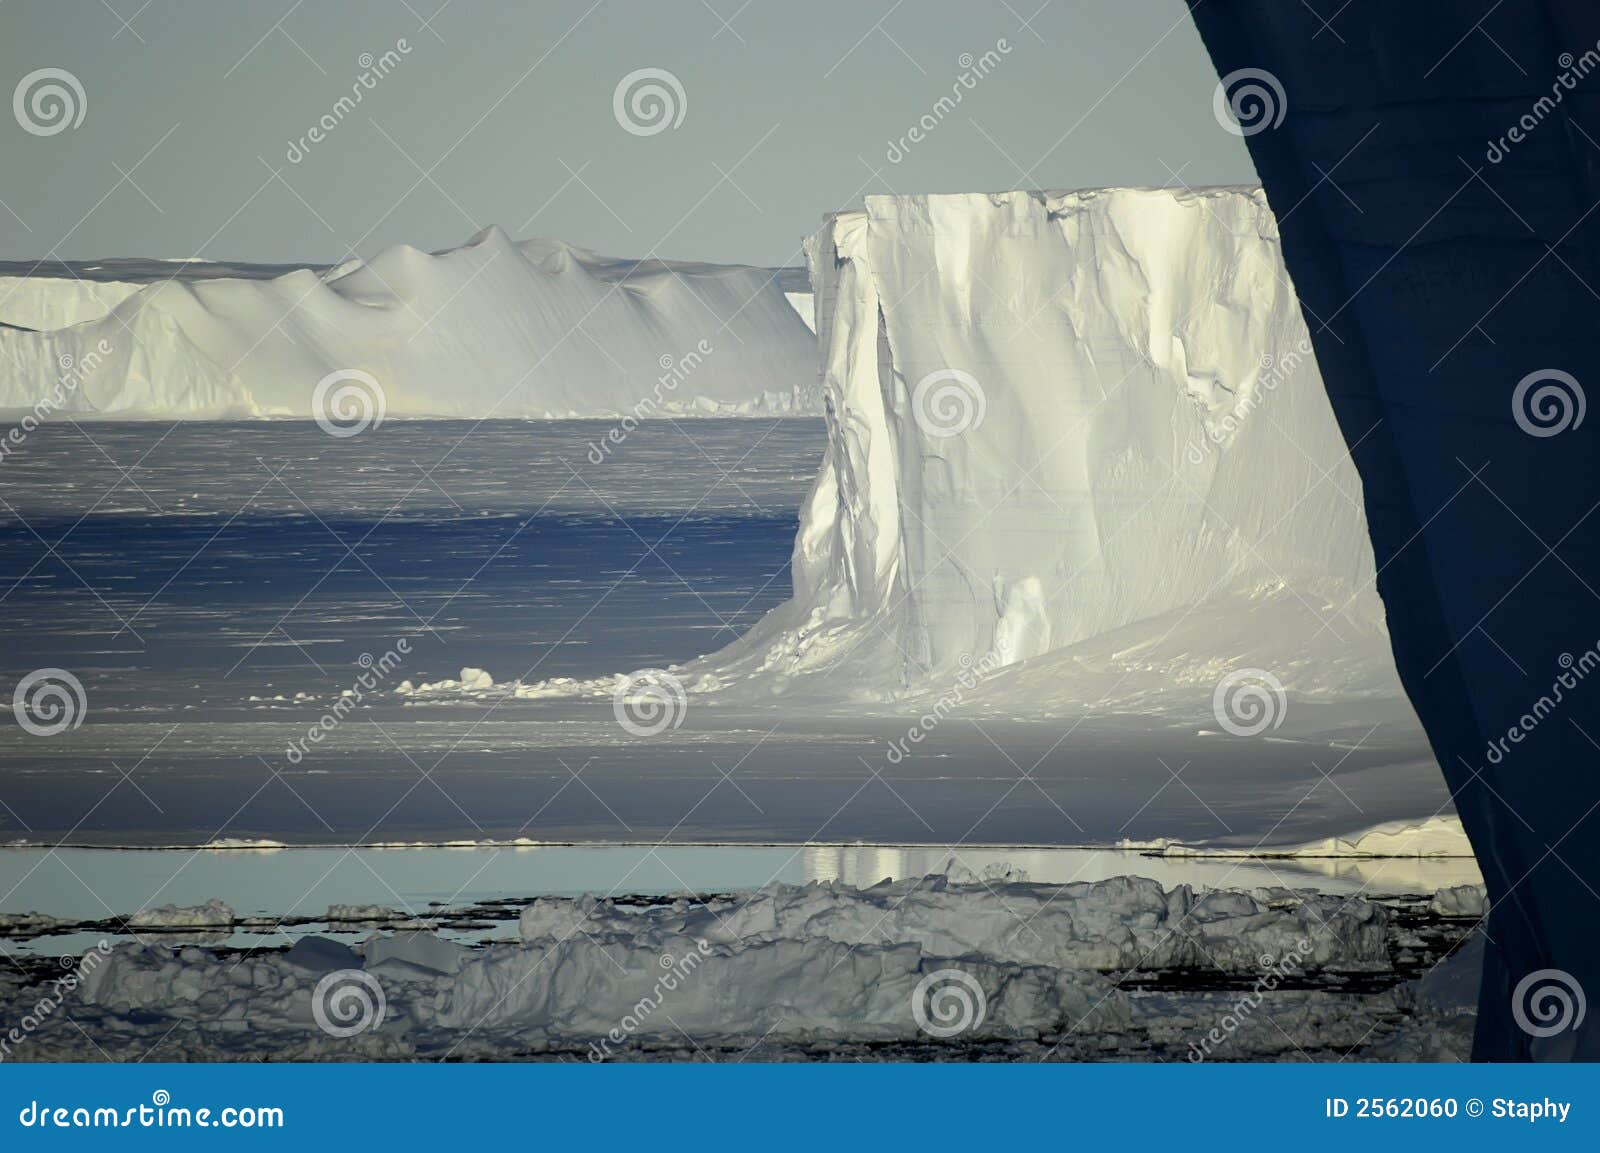 antarctic icescape